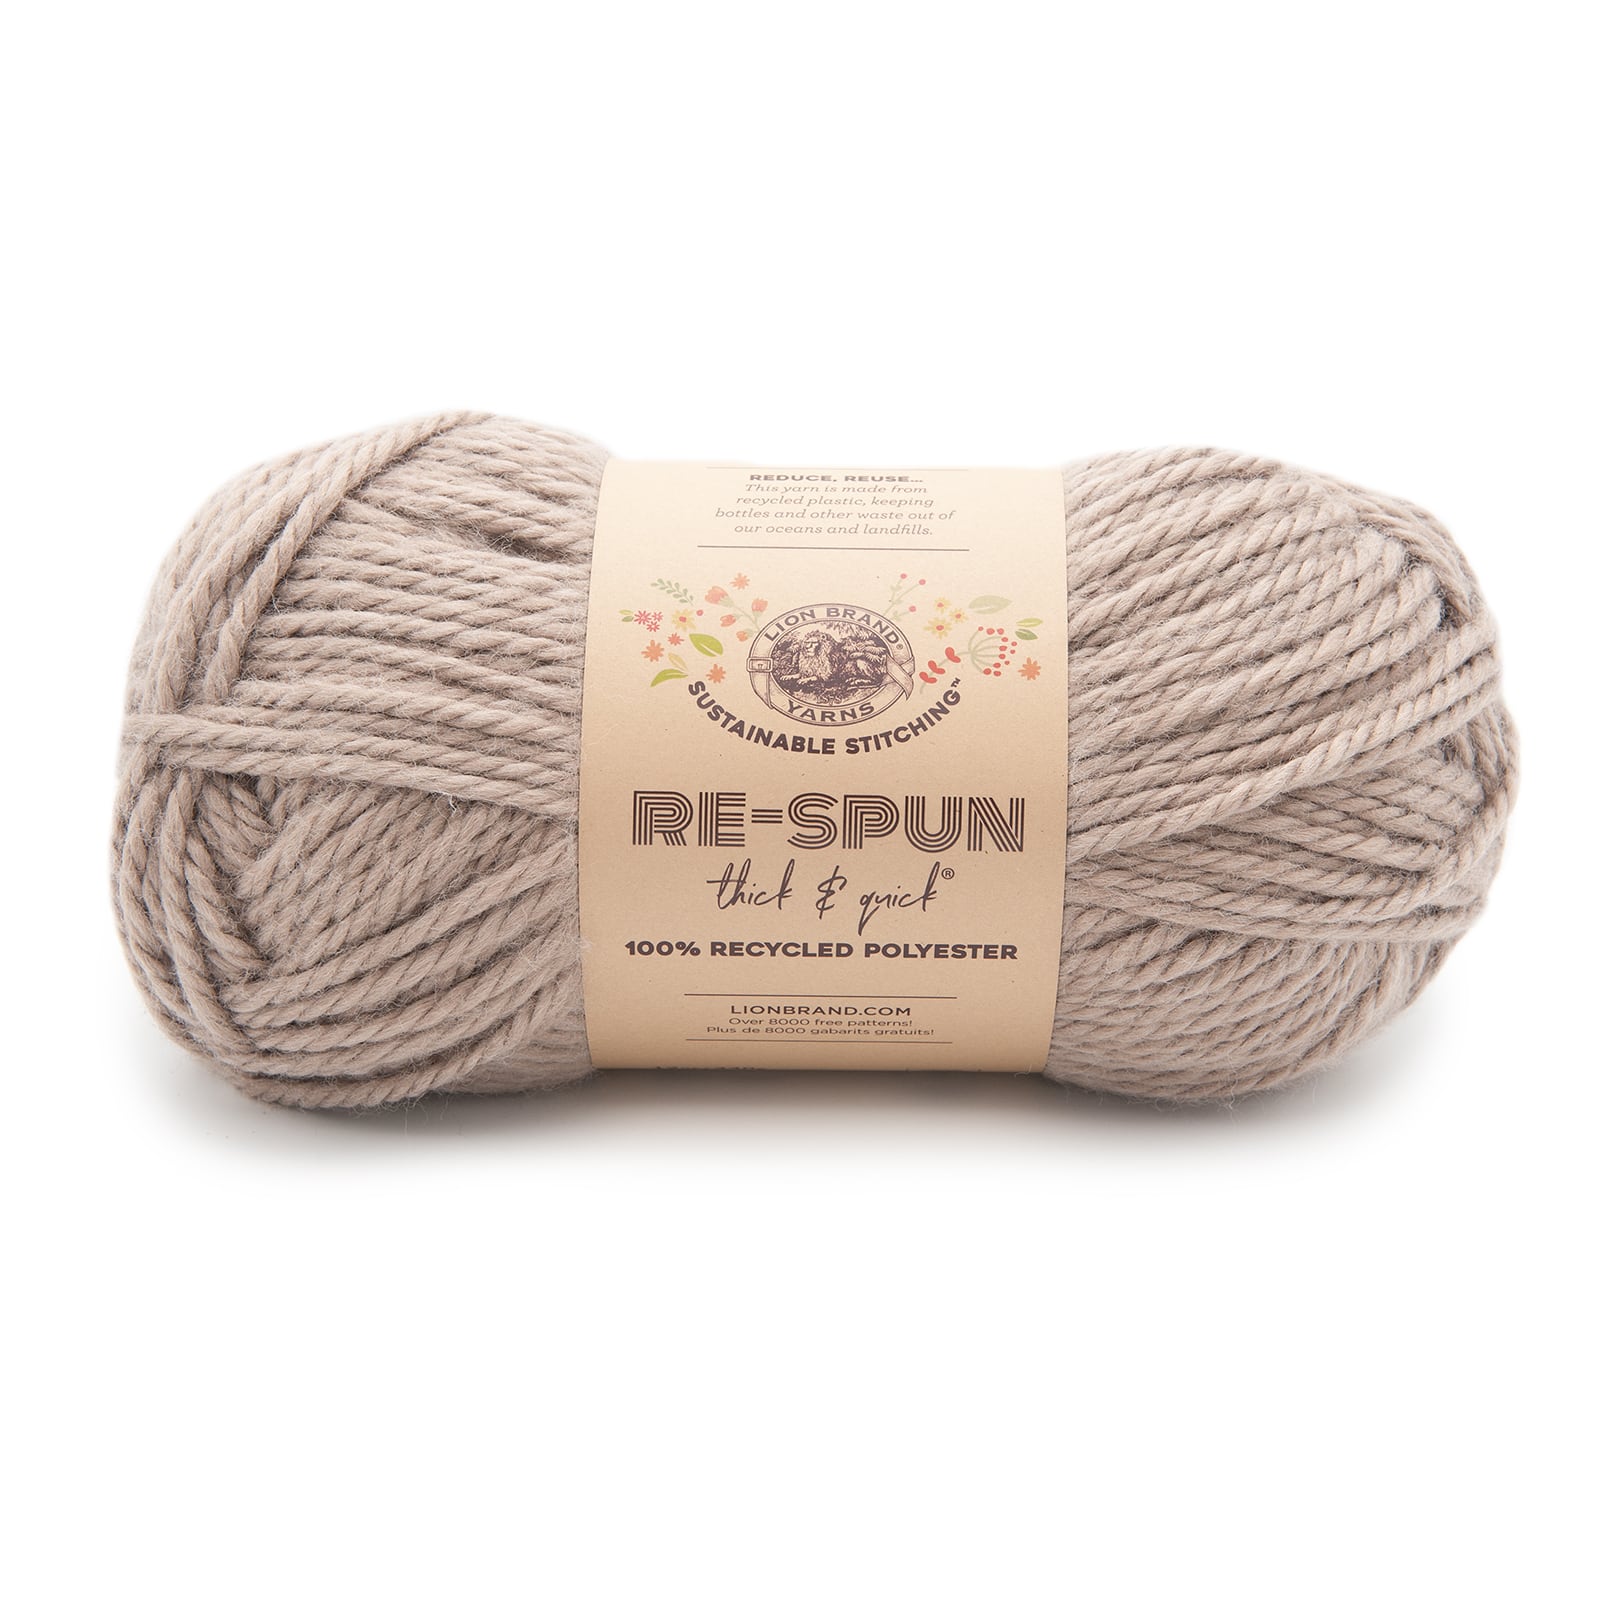 Lion Brand Wool Ease Thick & Quick 116E Succulent – Winterspun